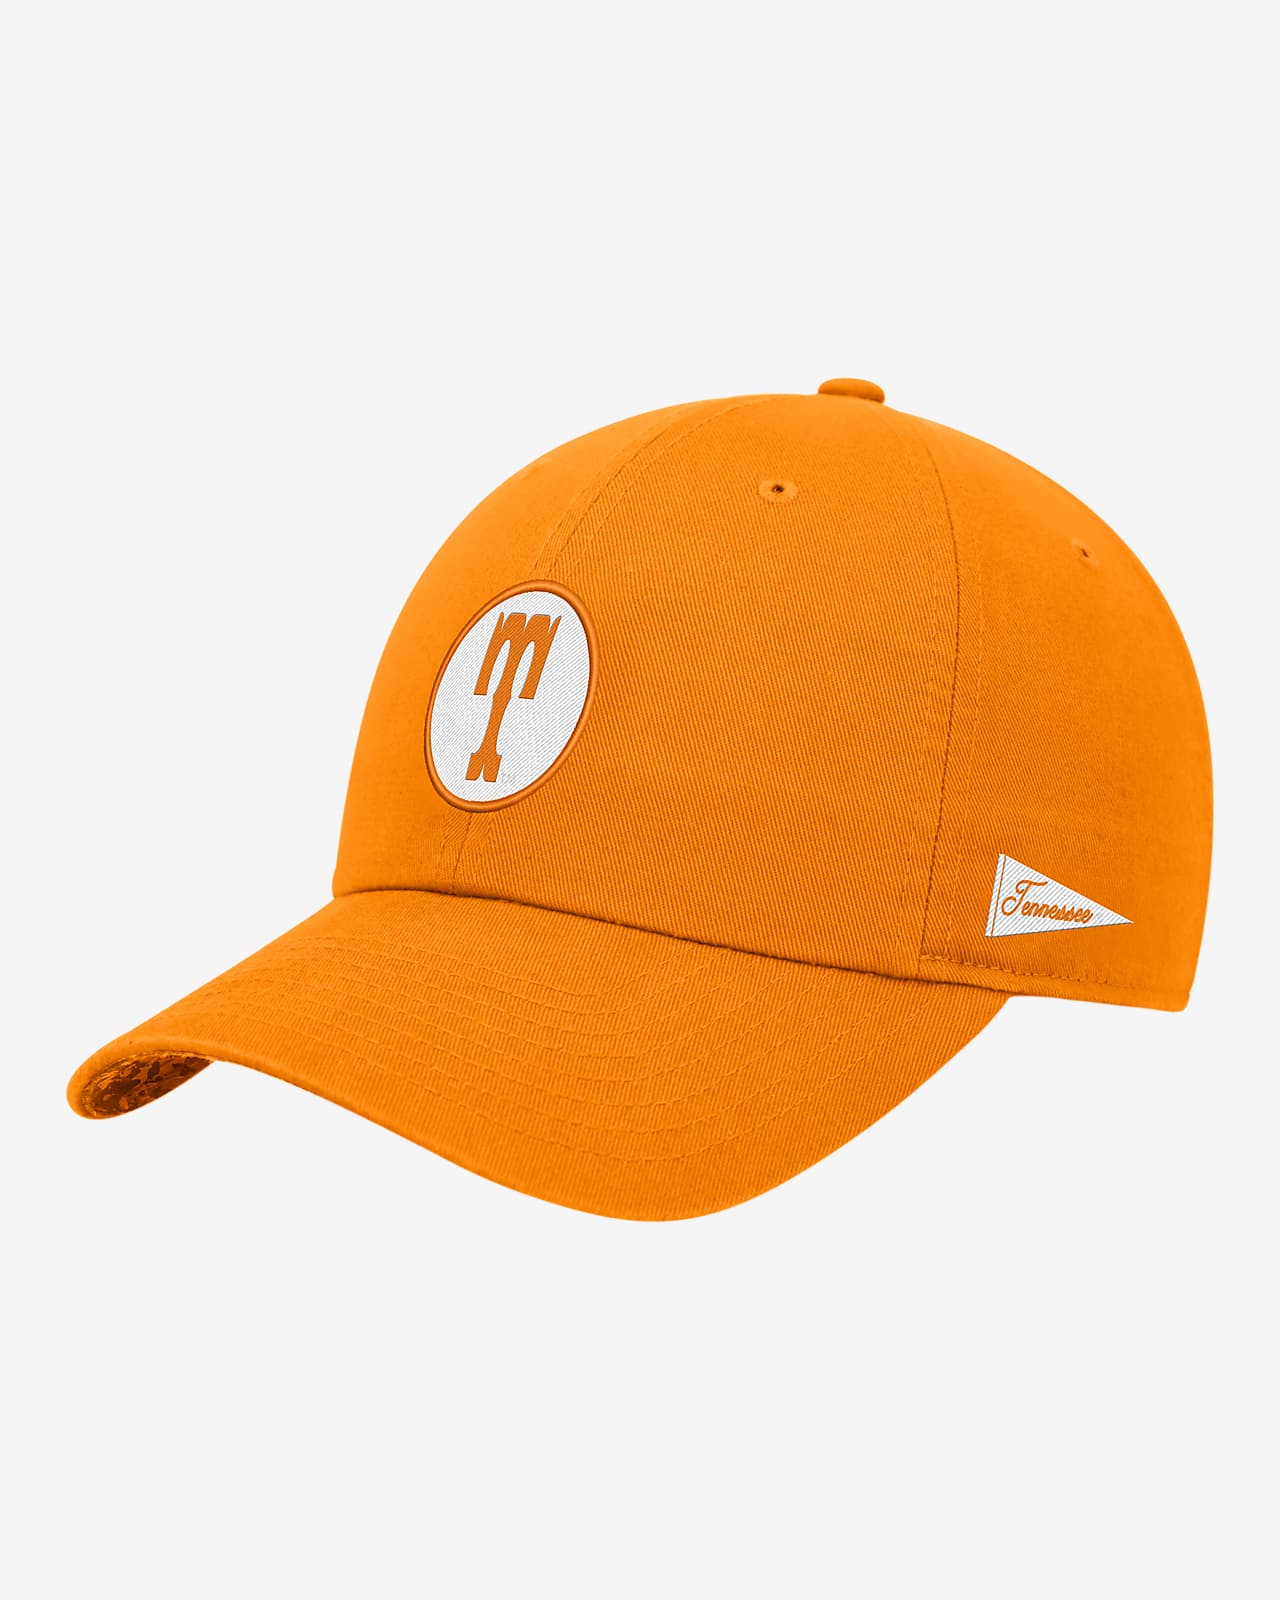 Tennessee Logo Nike College Adjustable Cap